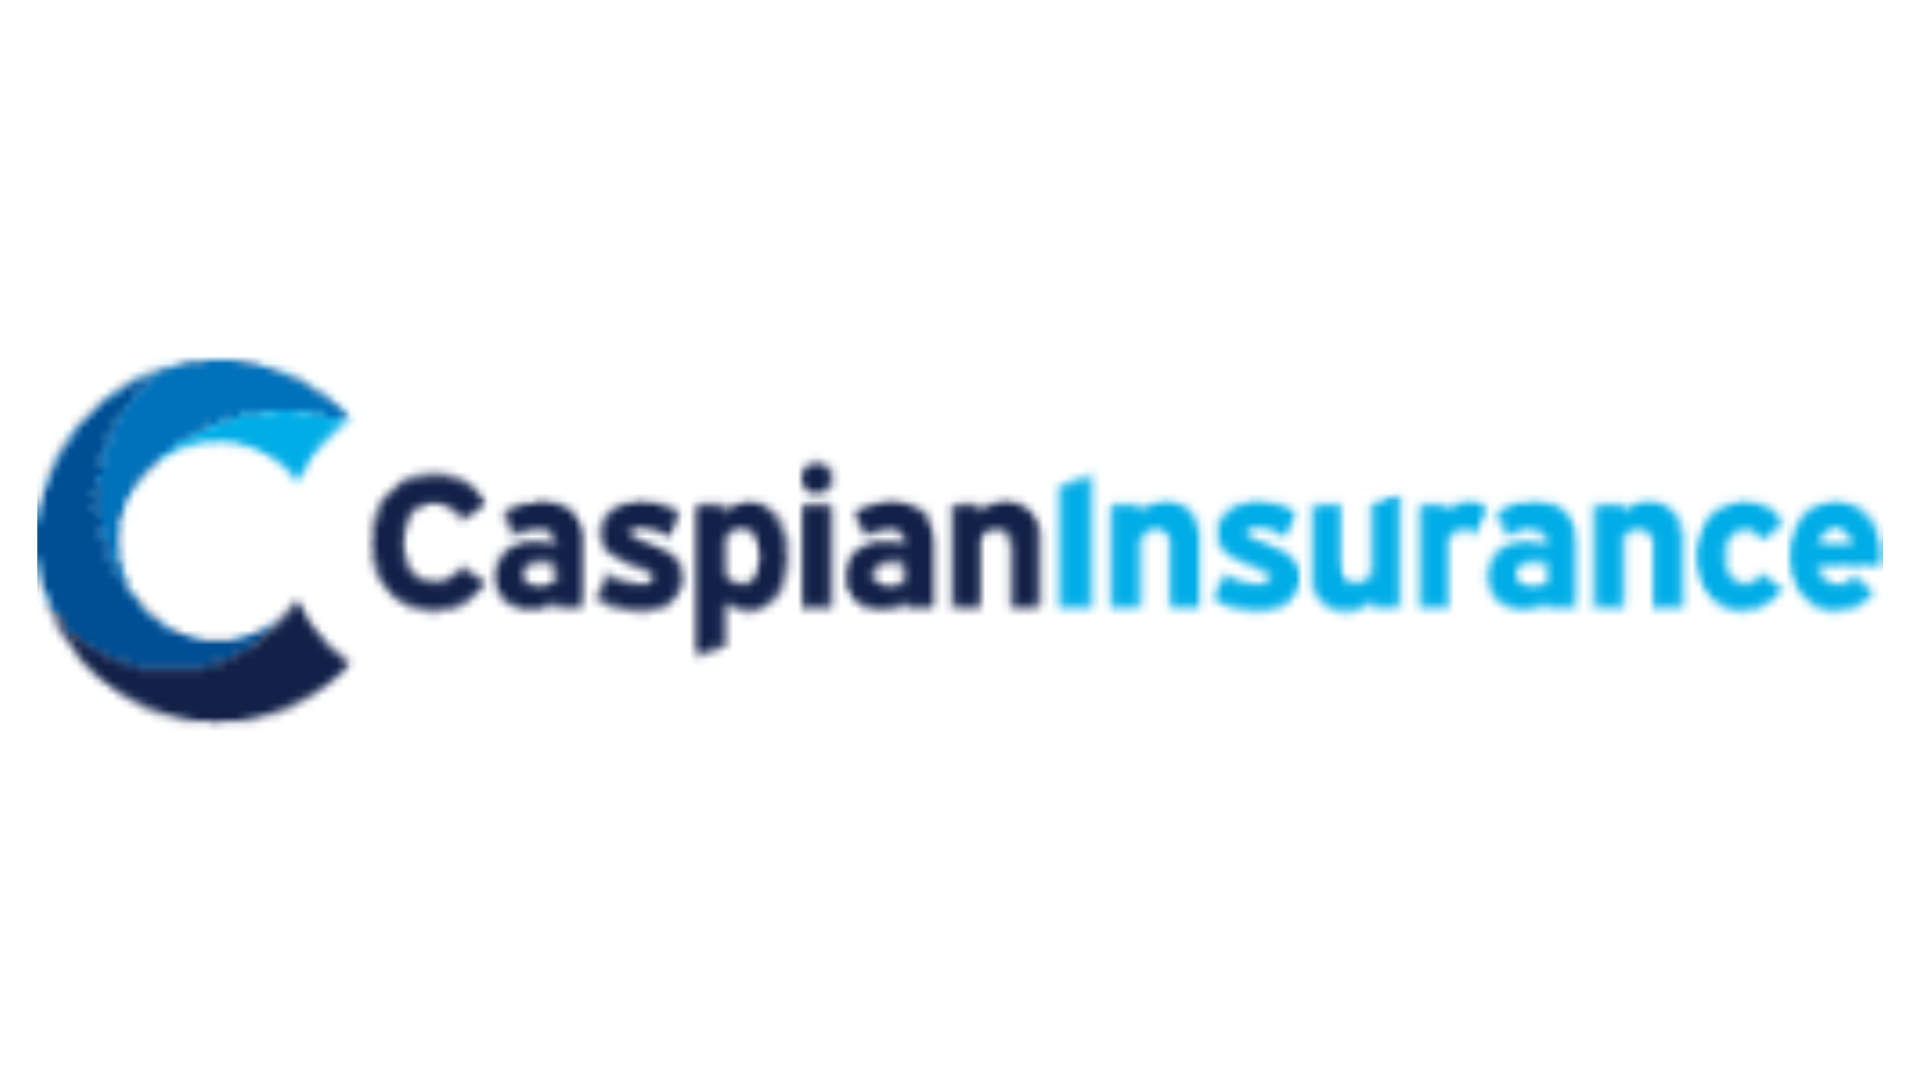 Caspian Insurance logo